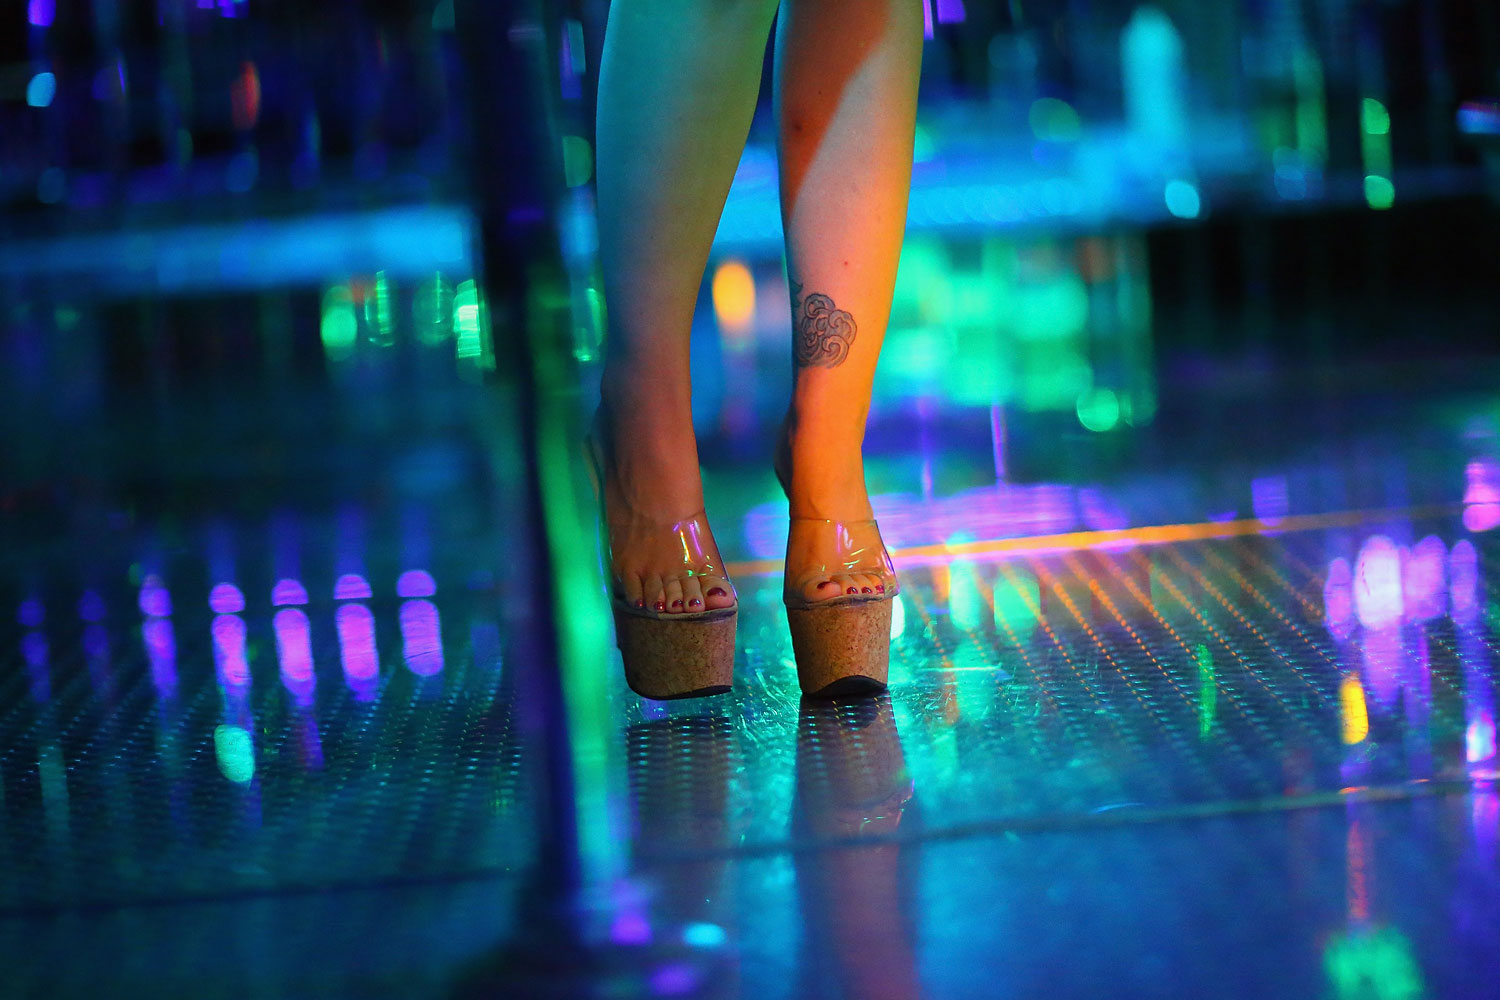 strip clubs gone wild